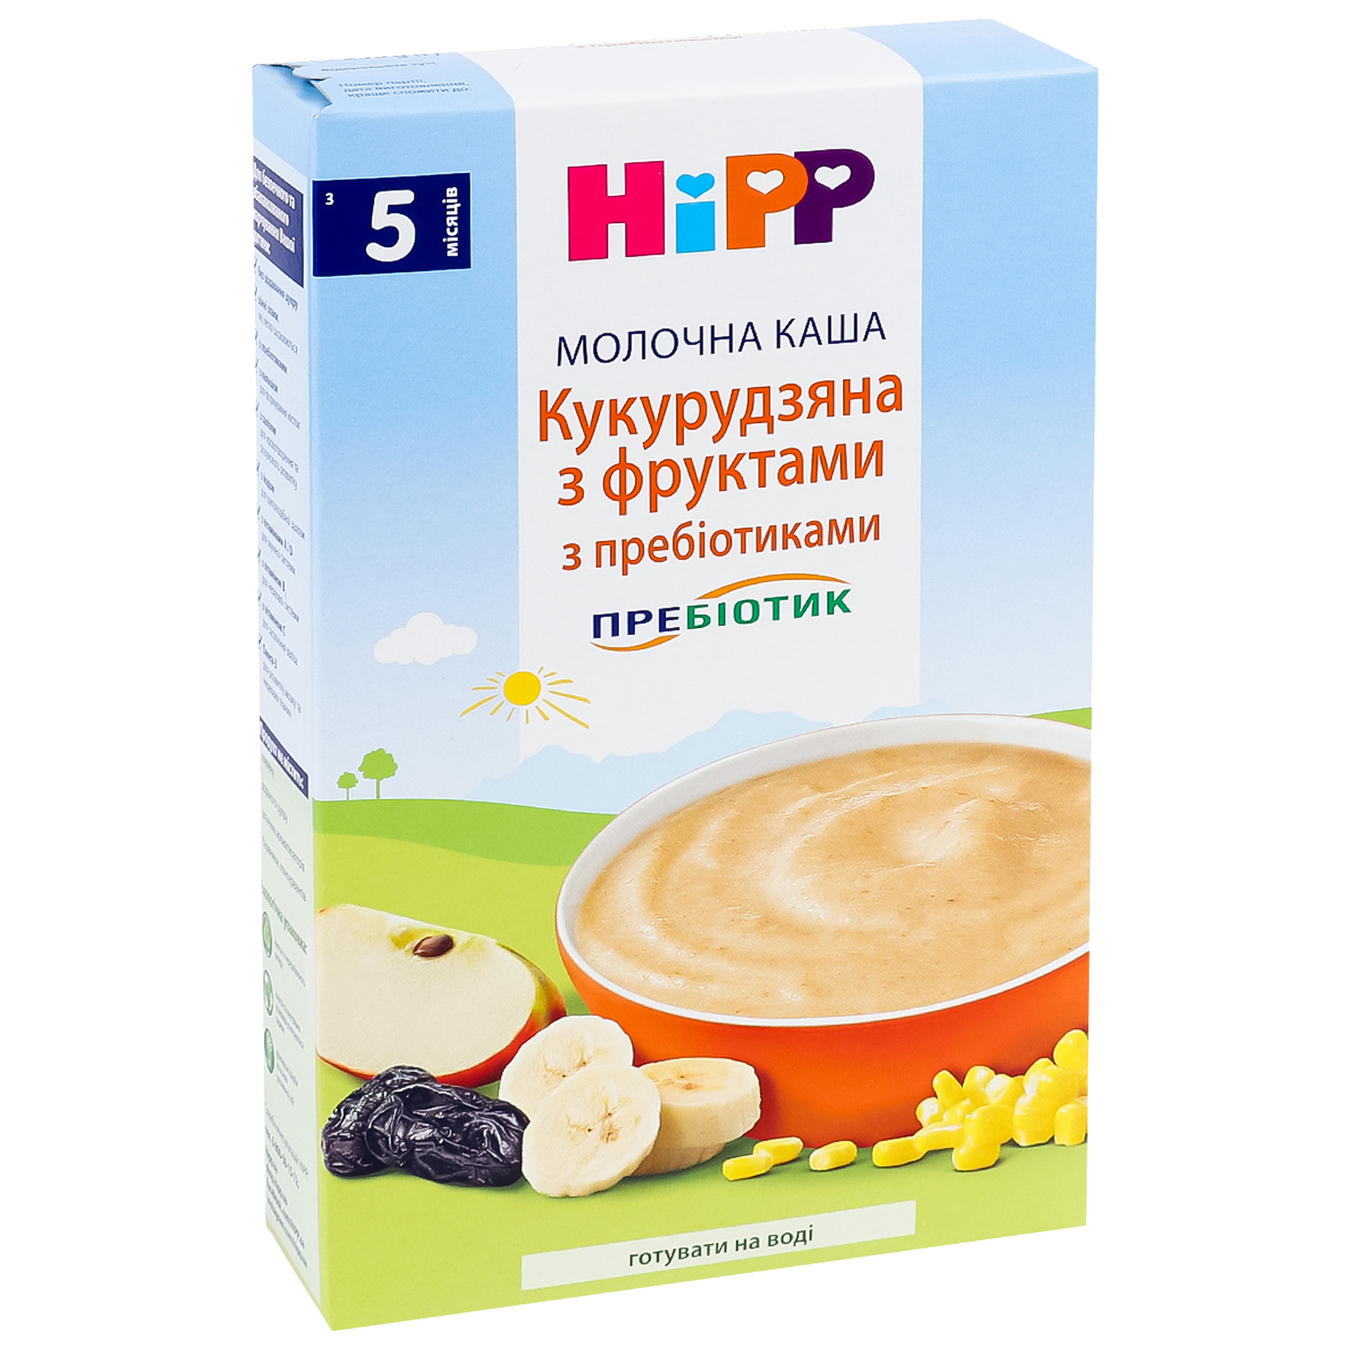 Каша детская HiPP Кукурузная с фруктами с пребиотиками молочная без сахара с 5 месяцев 250г 8